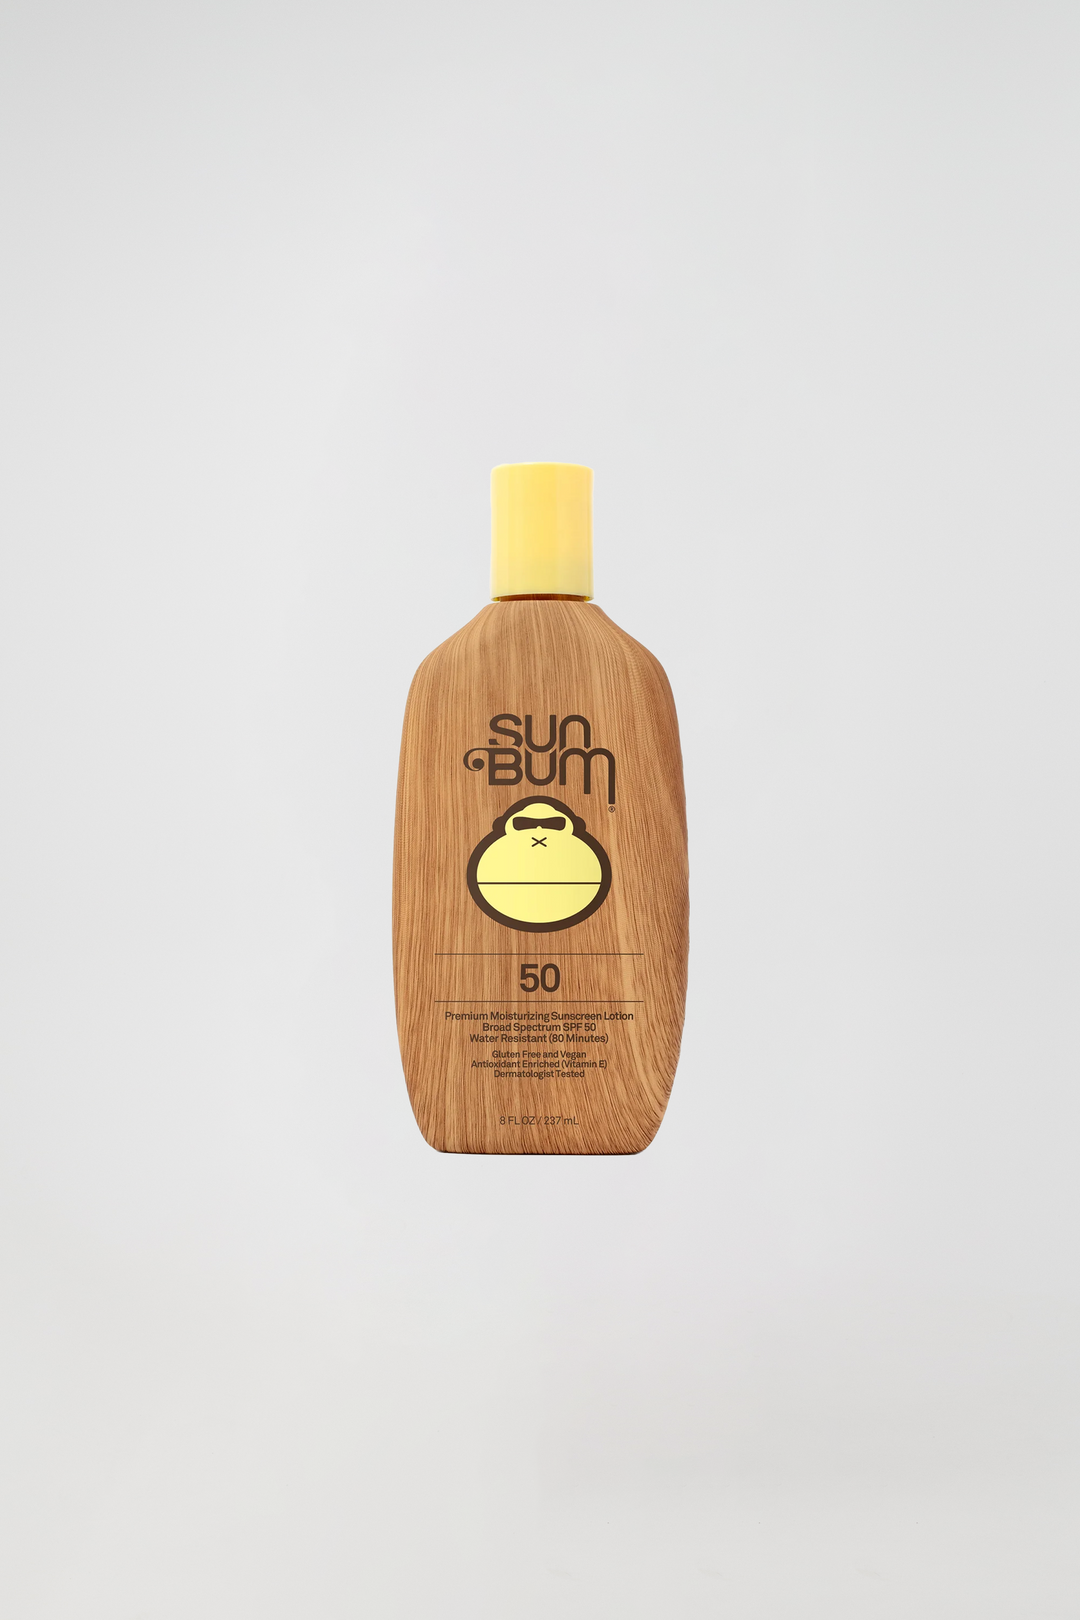 Sunbum Original SPF 50 Sunscreen Lotion